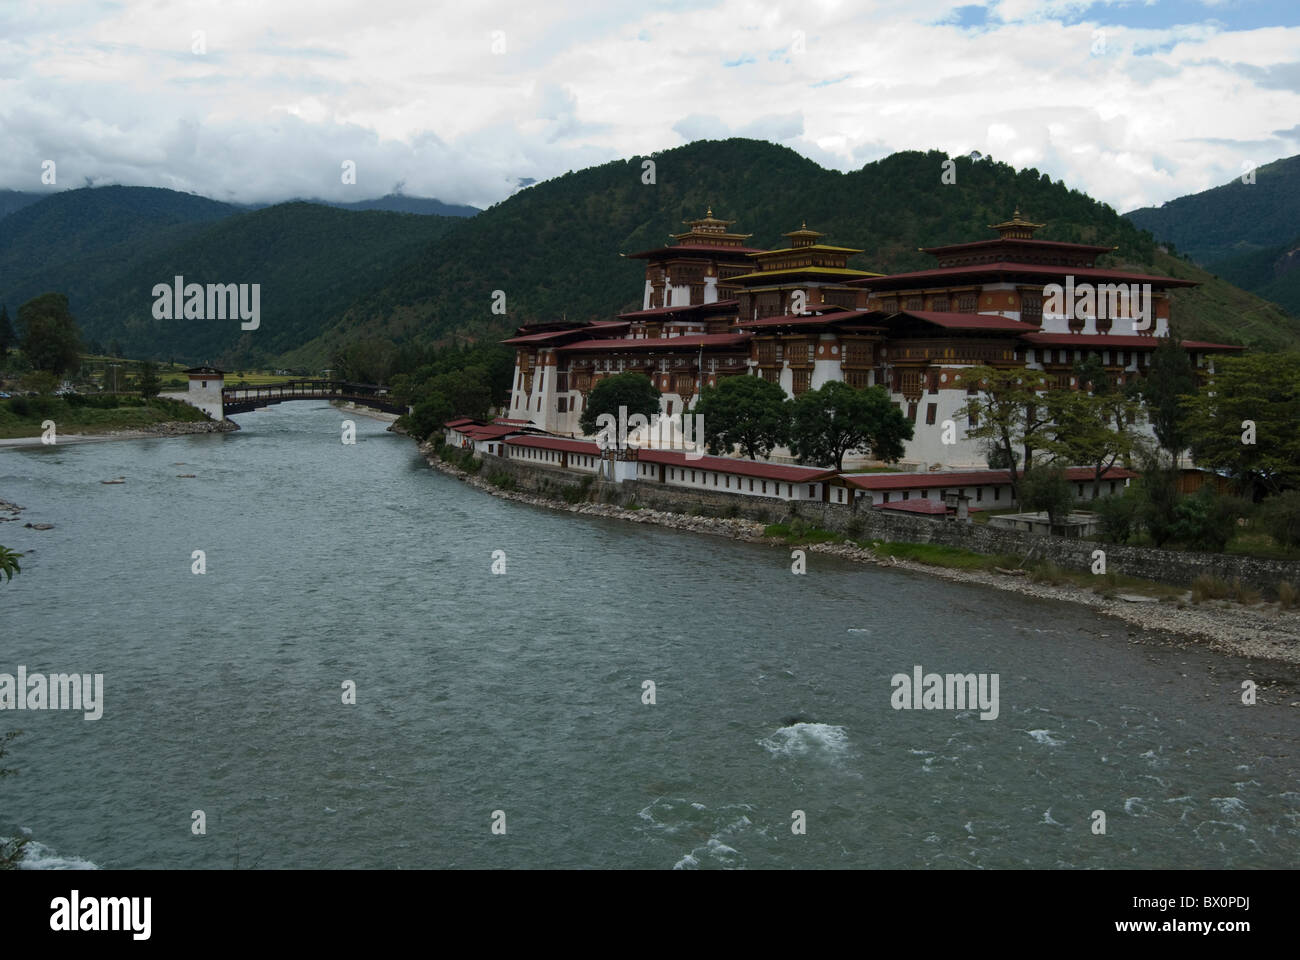 Elegante Punakha Dzong am Ufer Flusses von Punakha, Bhutan Stockfoto